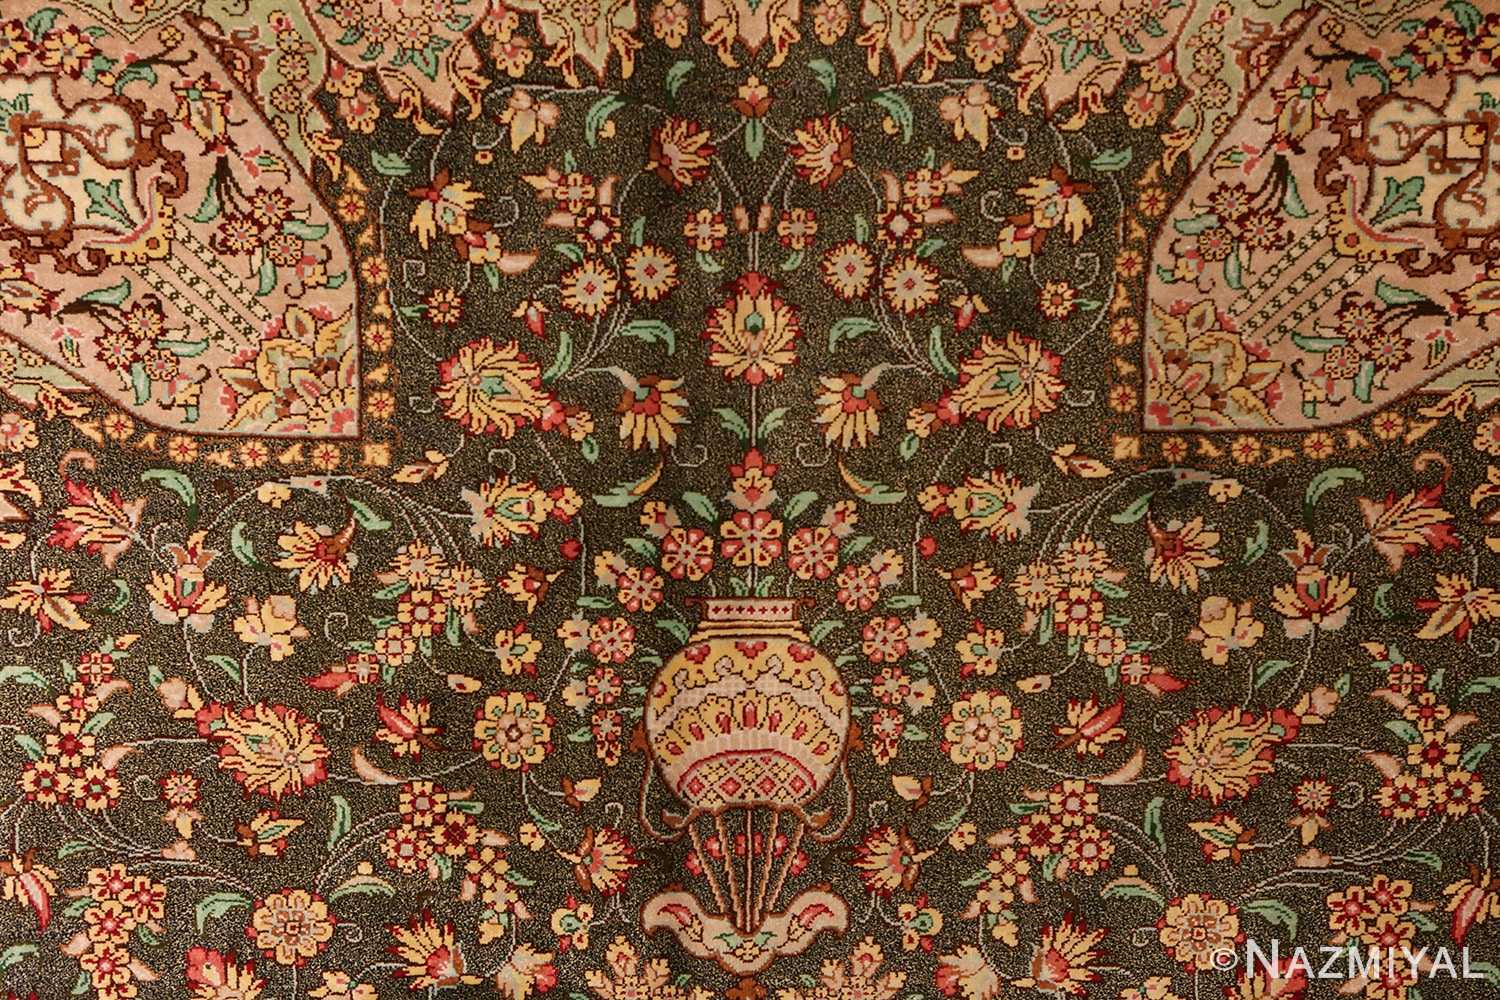 https://cdn.nazmiyalantiquerugs.com/wp-content/uploads/2020/12/watermark/vase-fine-floral-silk-vintage-persian-qum-rug-70791-nazmiyal.jpg